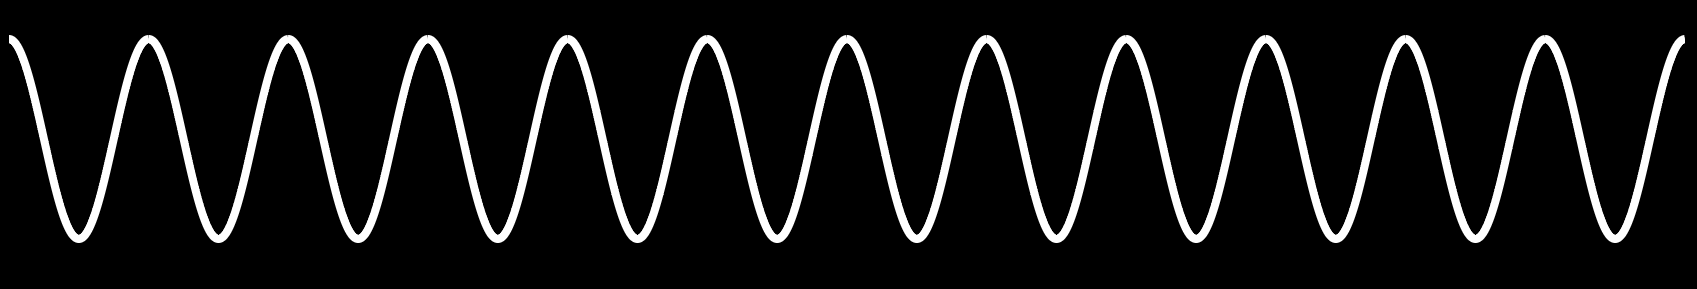 regular sine wave